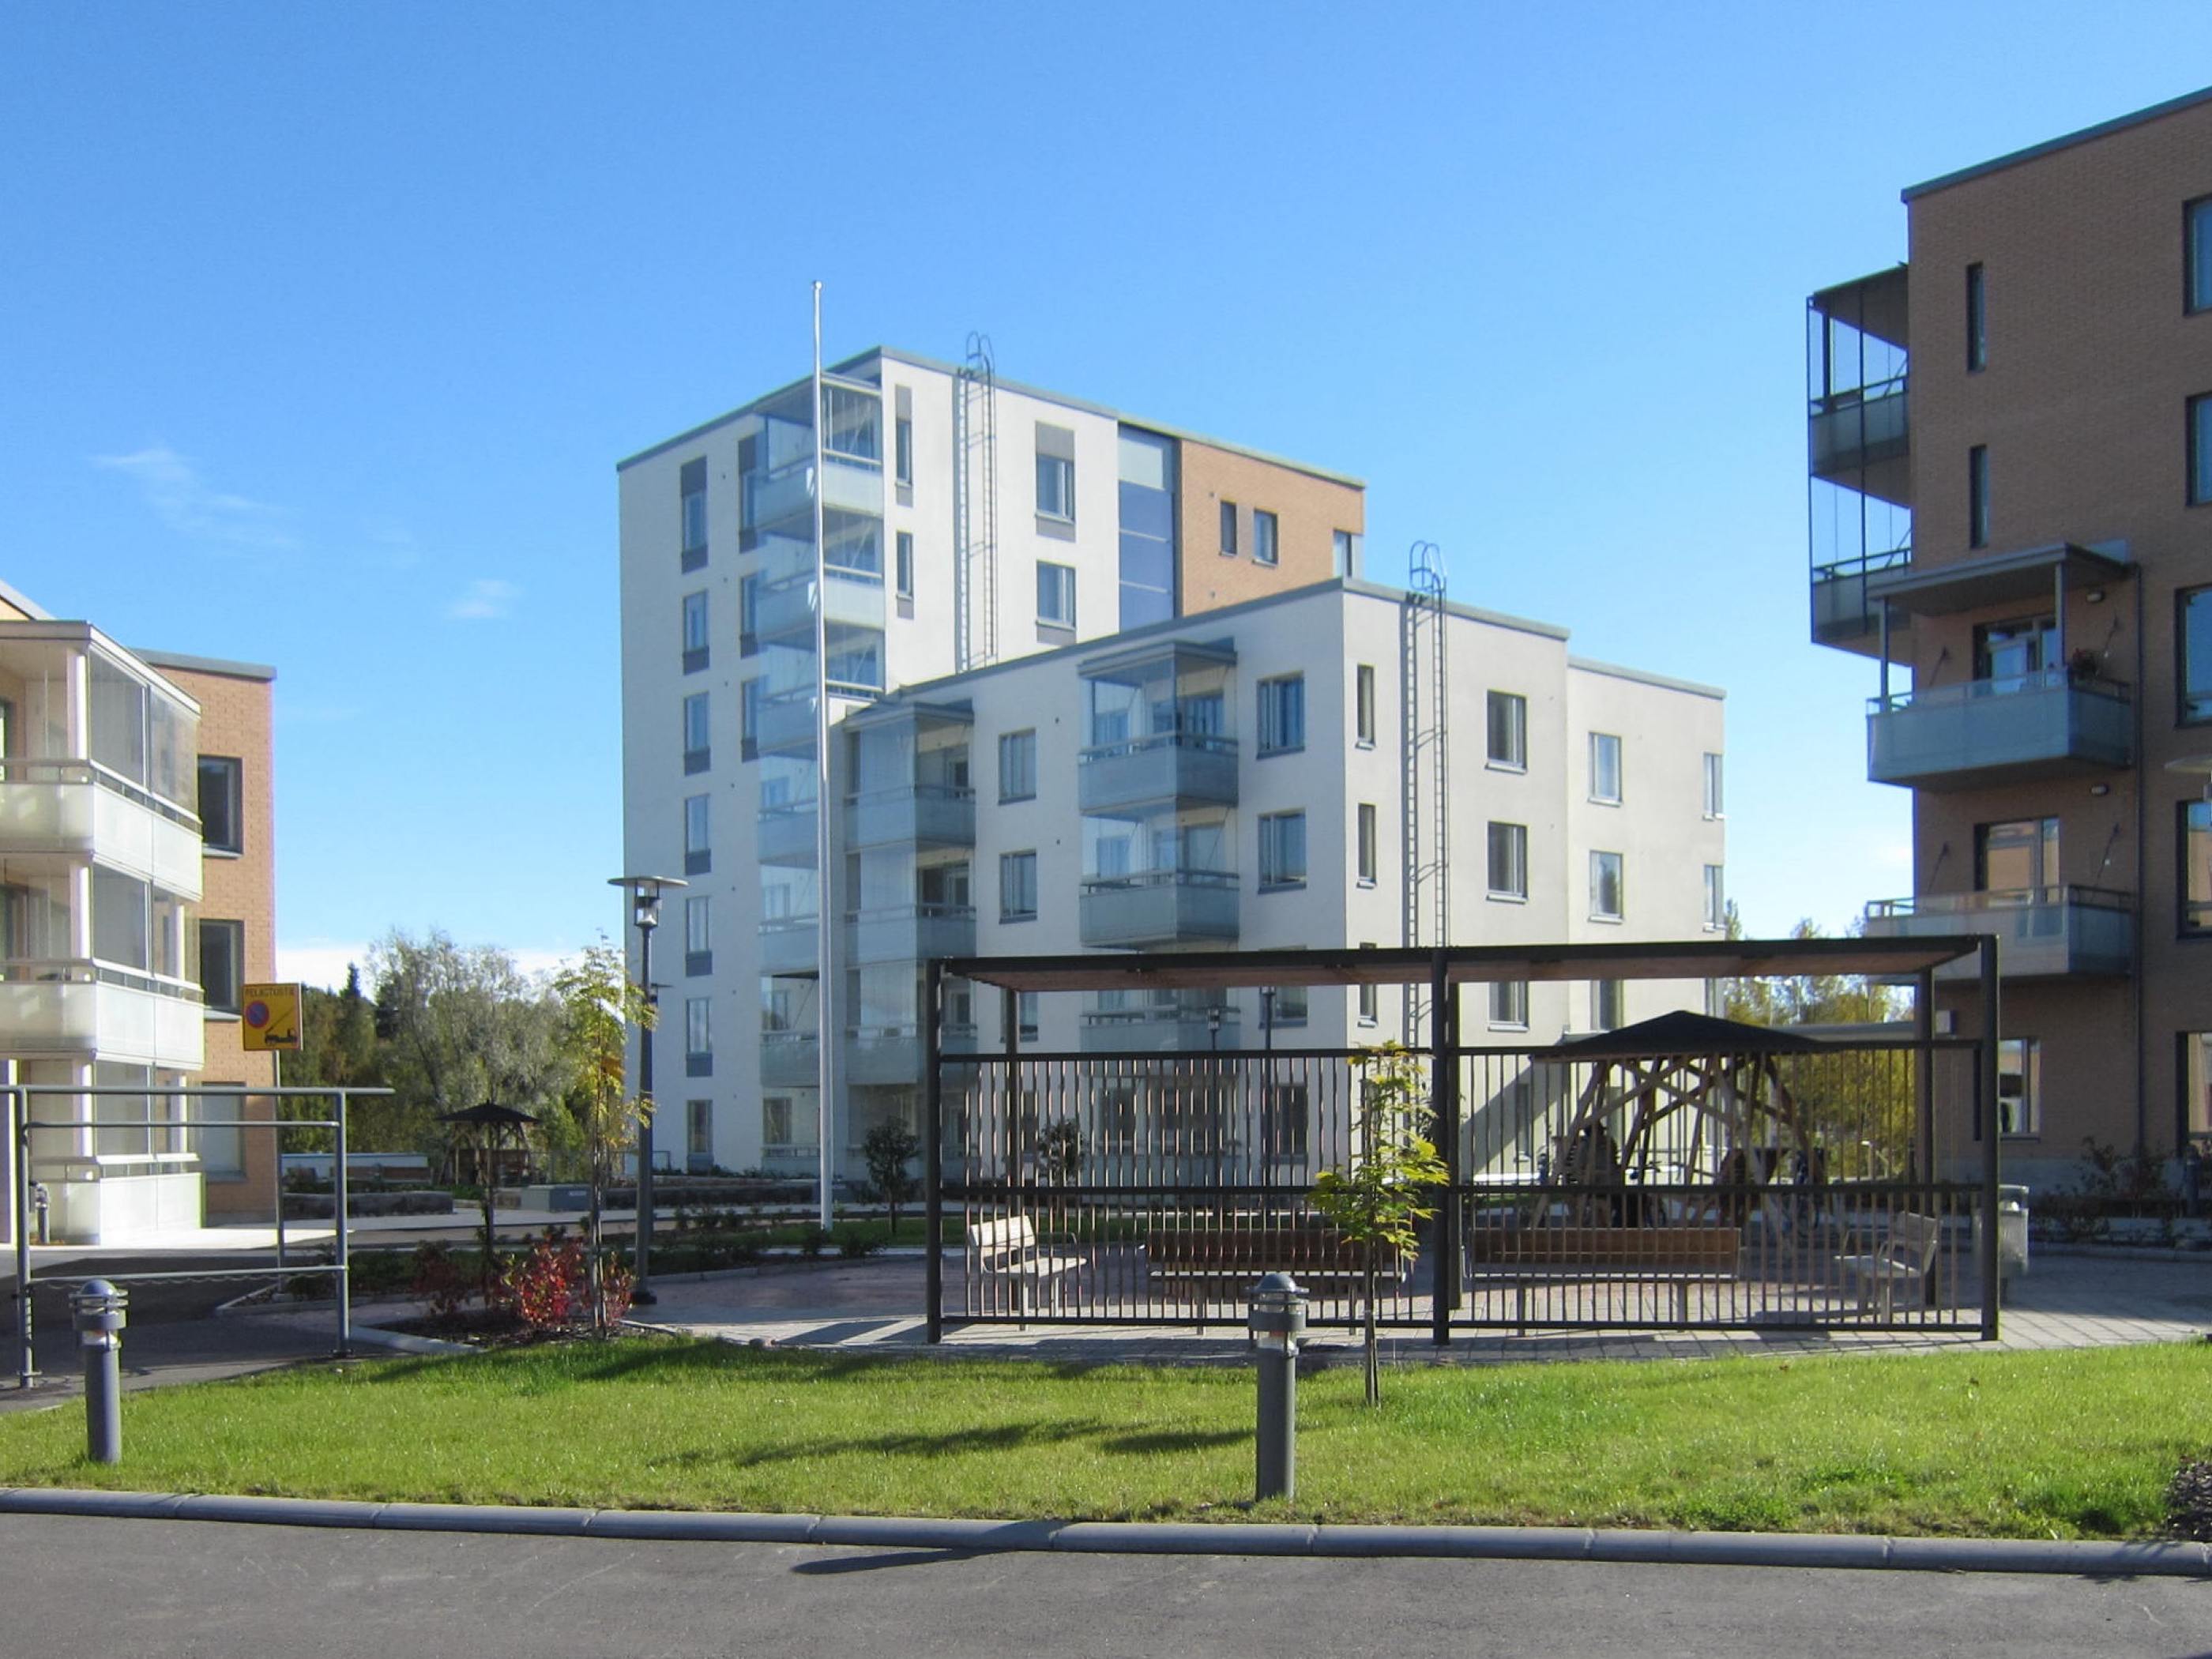 Care center for elderly Puistokartano and Päivänkehrä senior housing